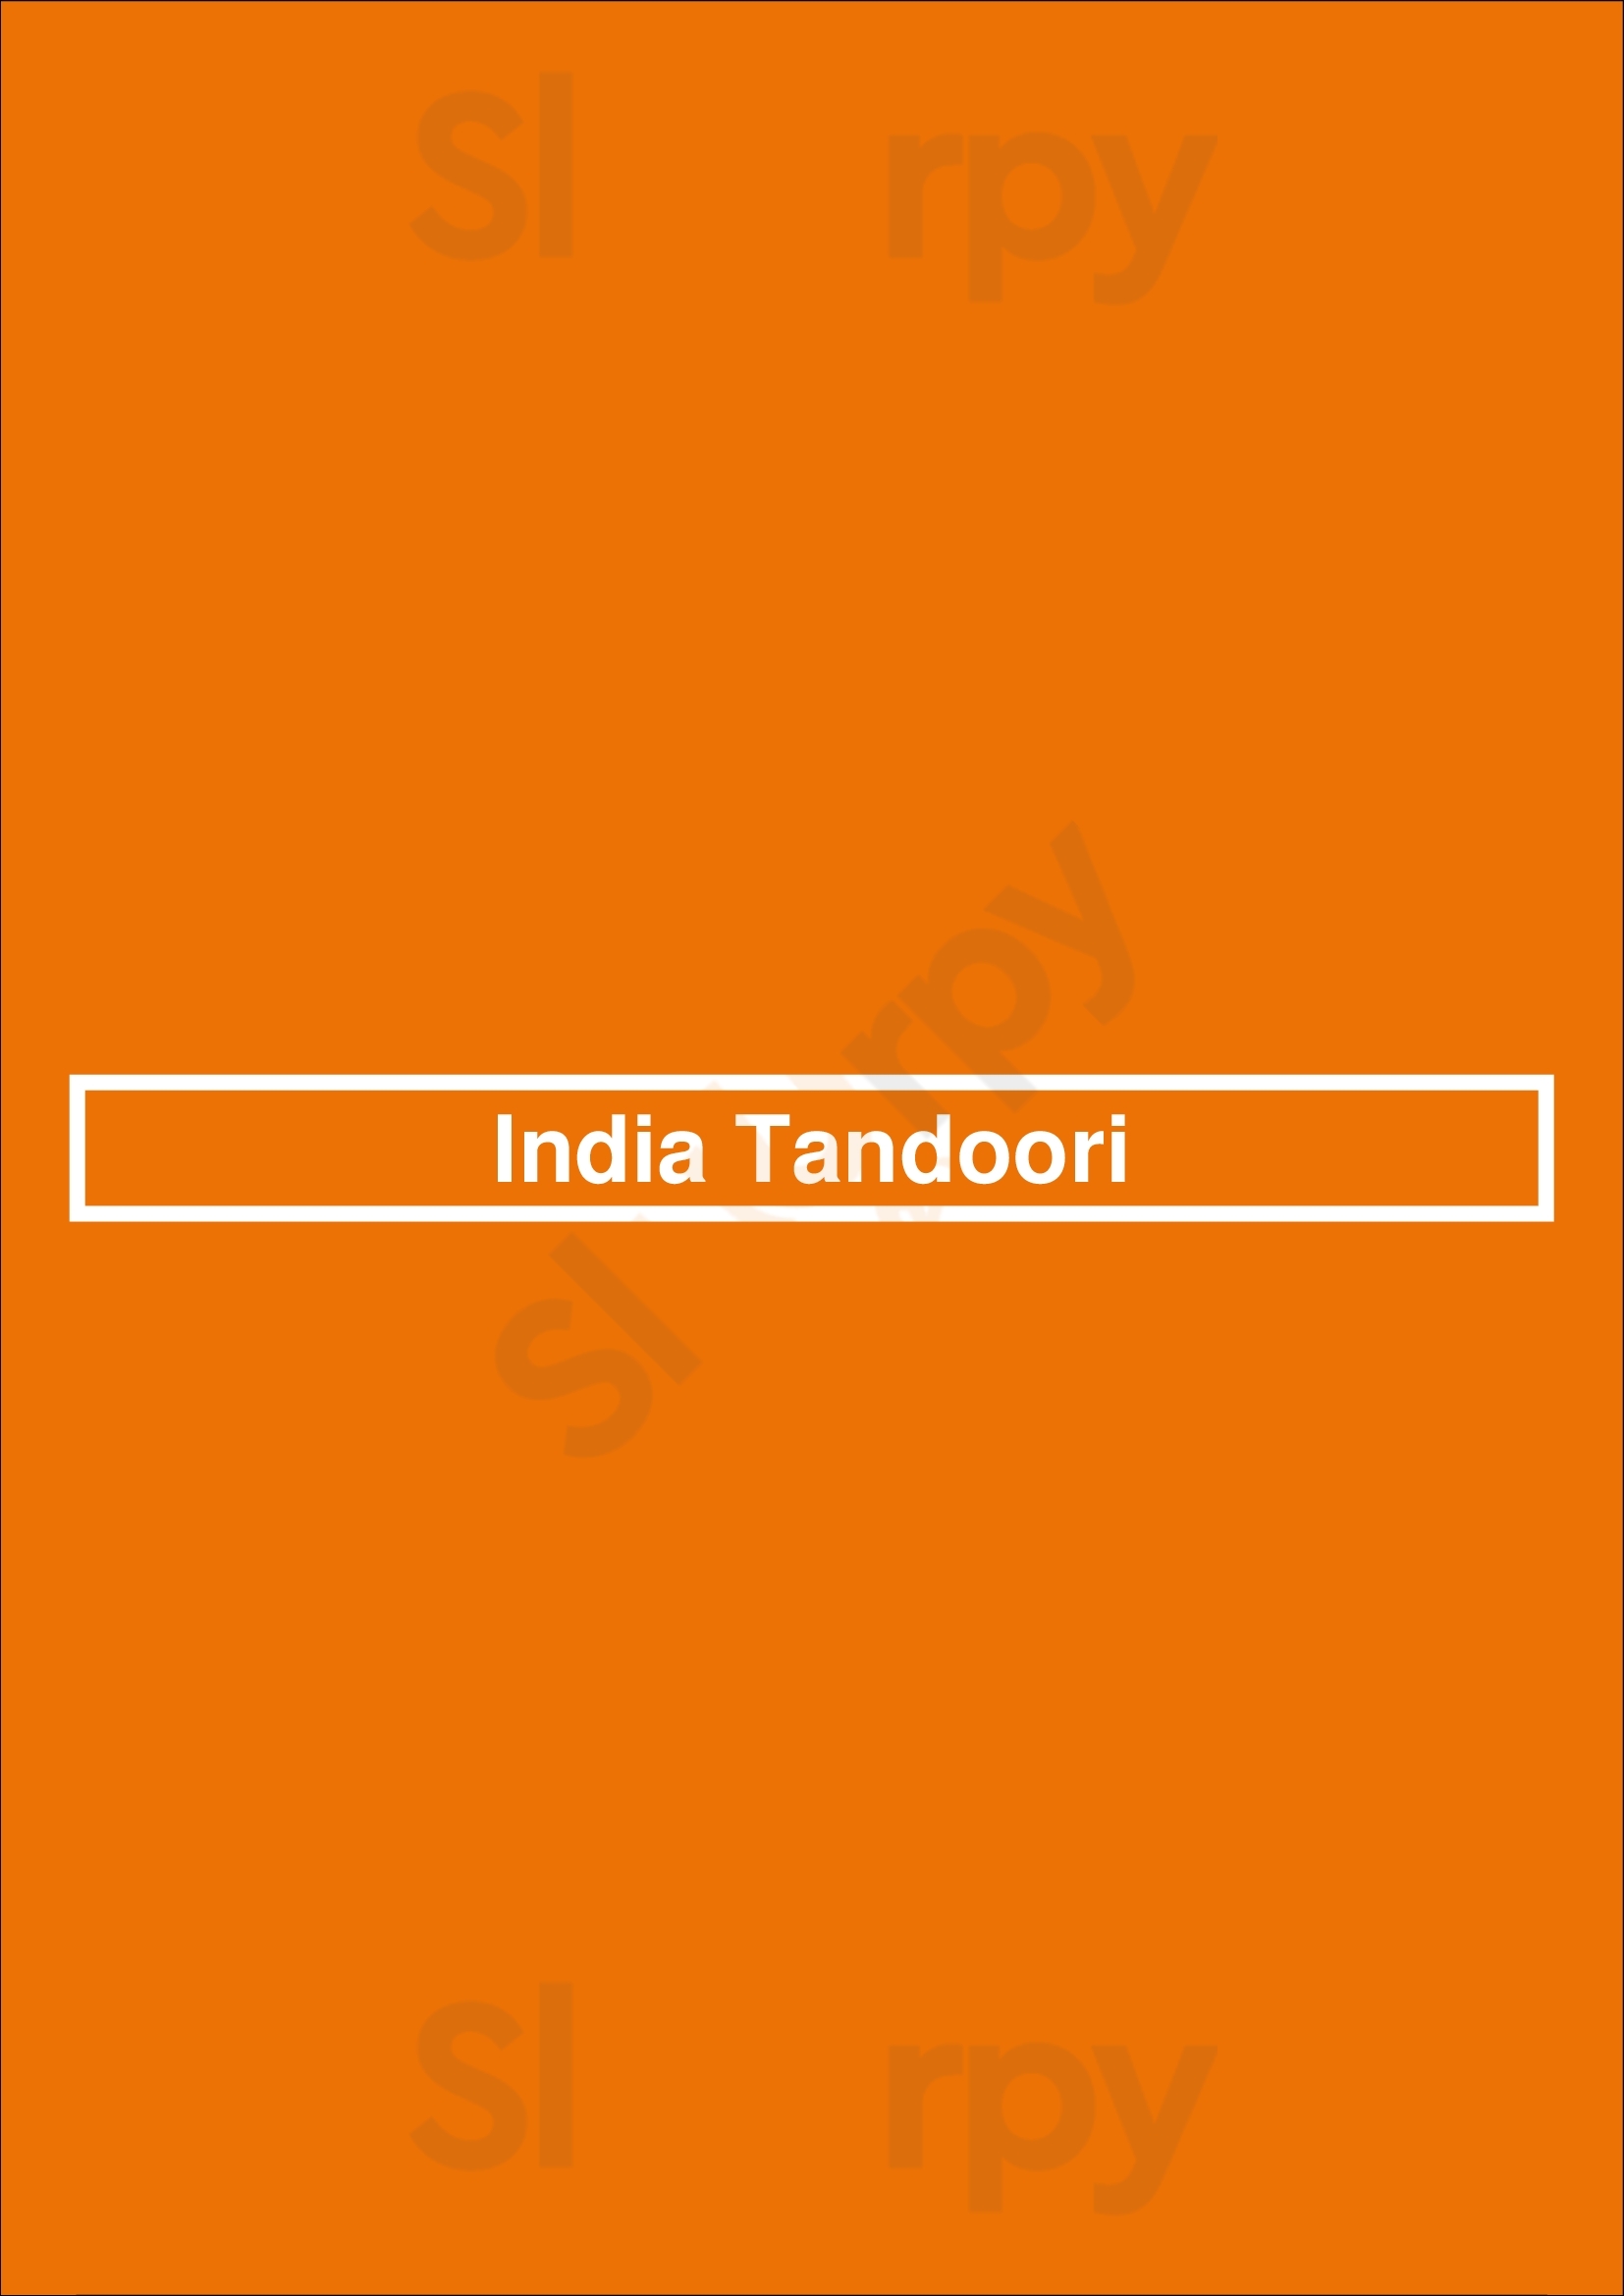 India Tandoori Glasgow Menu - 1